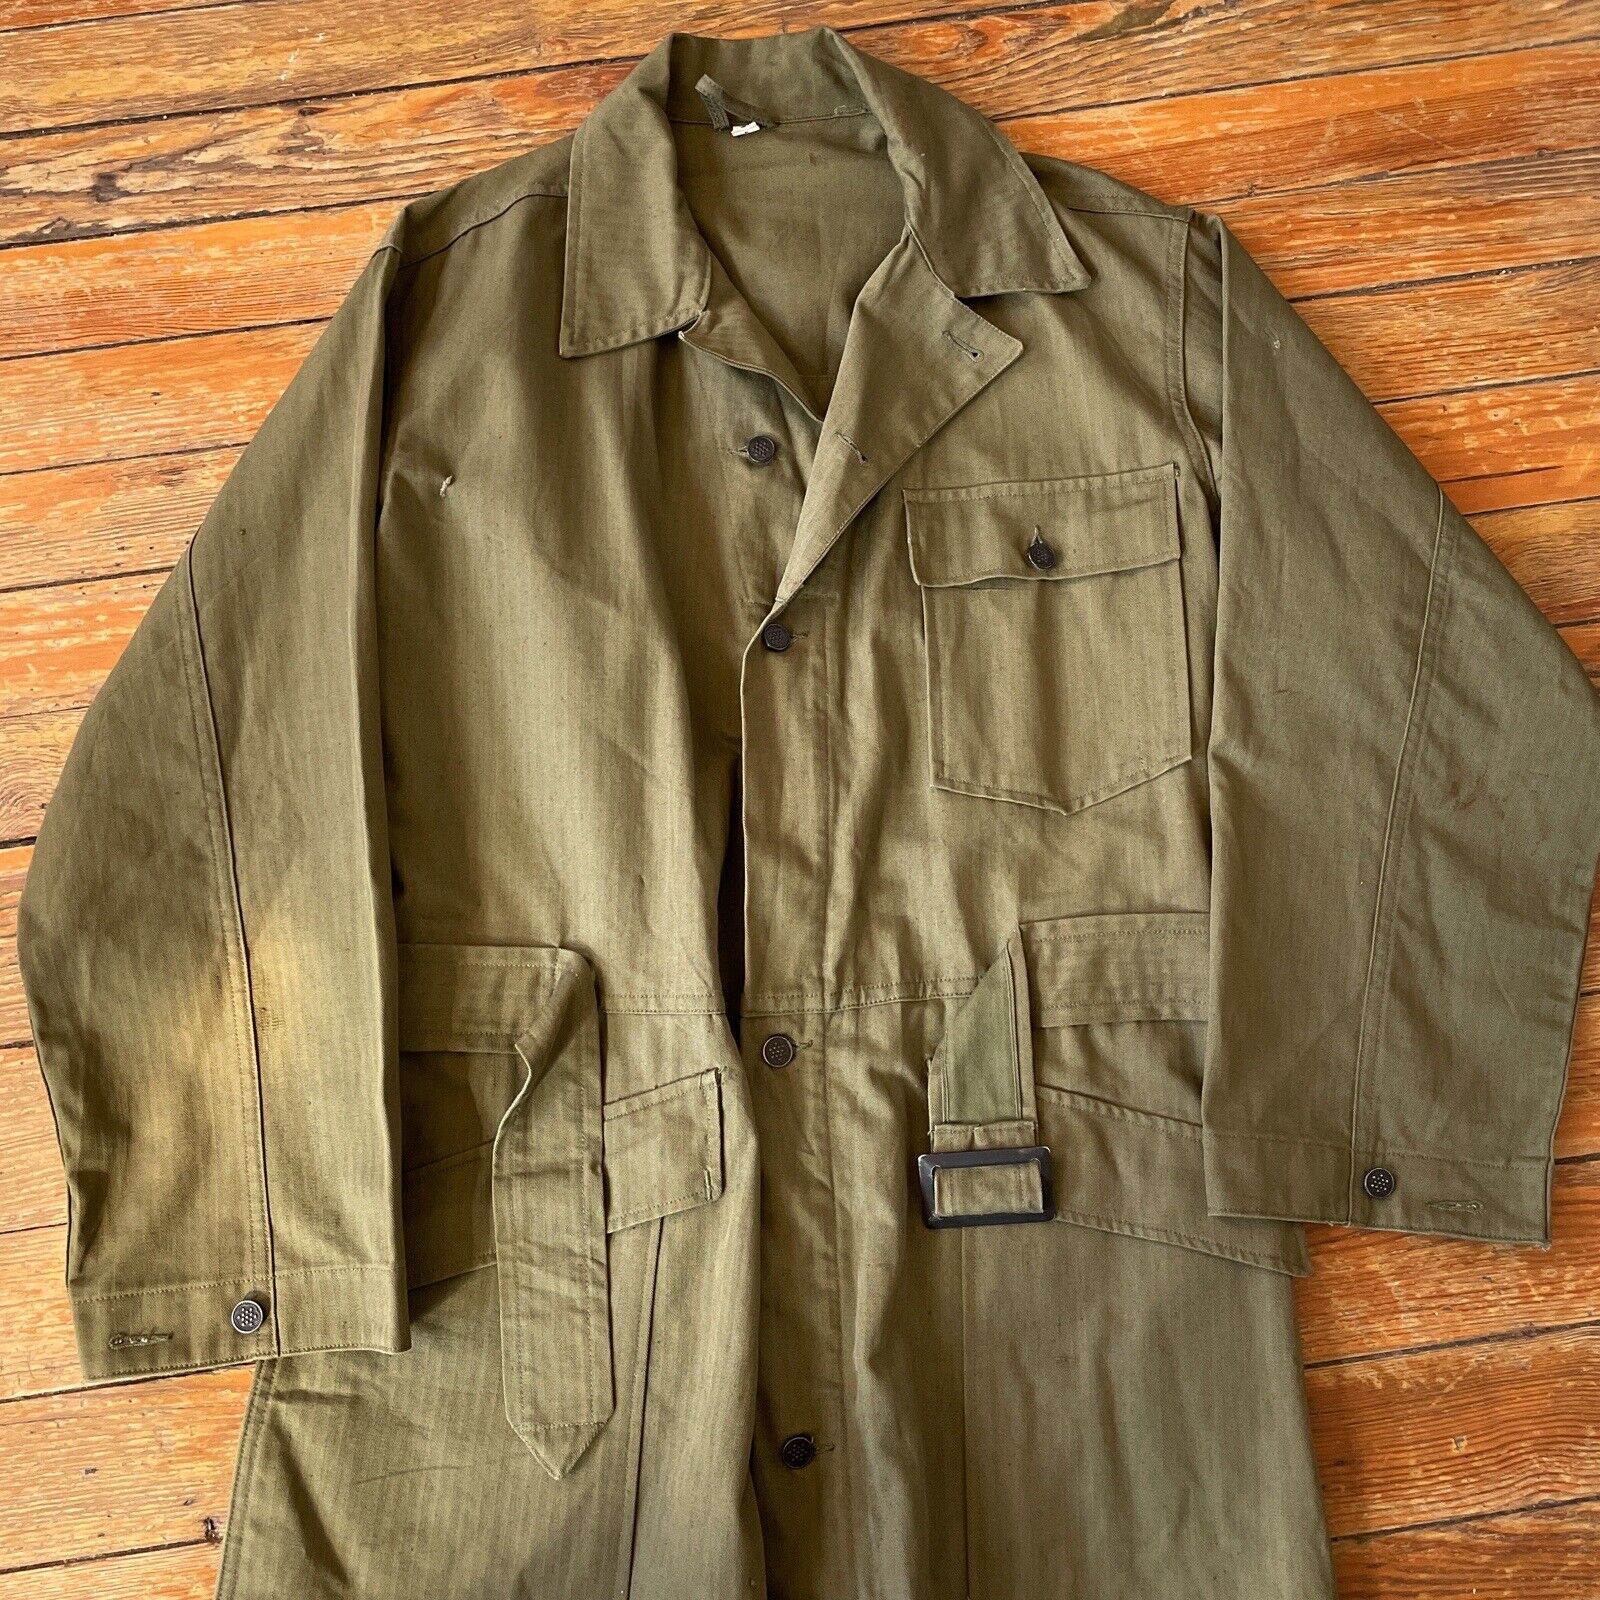 Vintage 1940s WWII Herringbone Twill Cotton Coveralls Jumpsuit Size 42R 1944 HBT